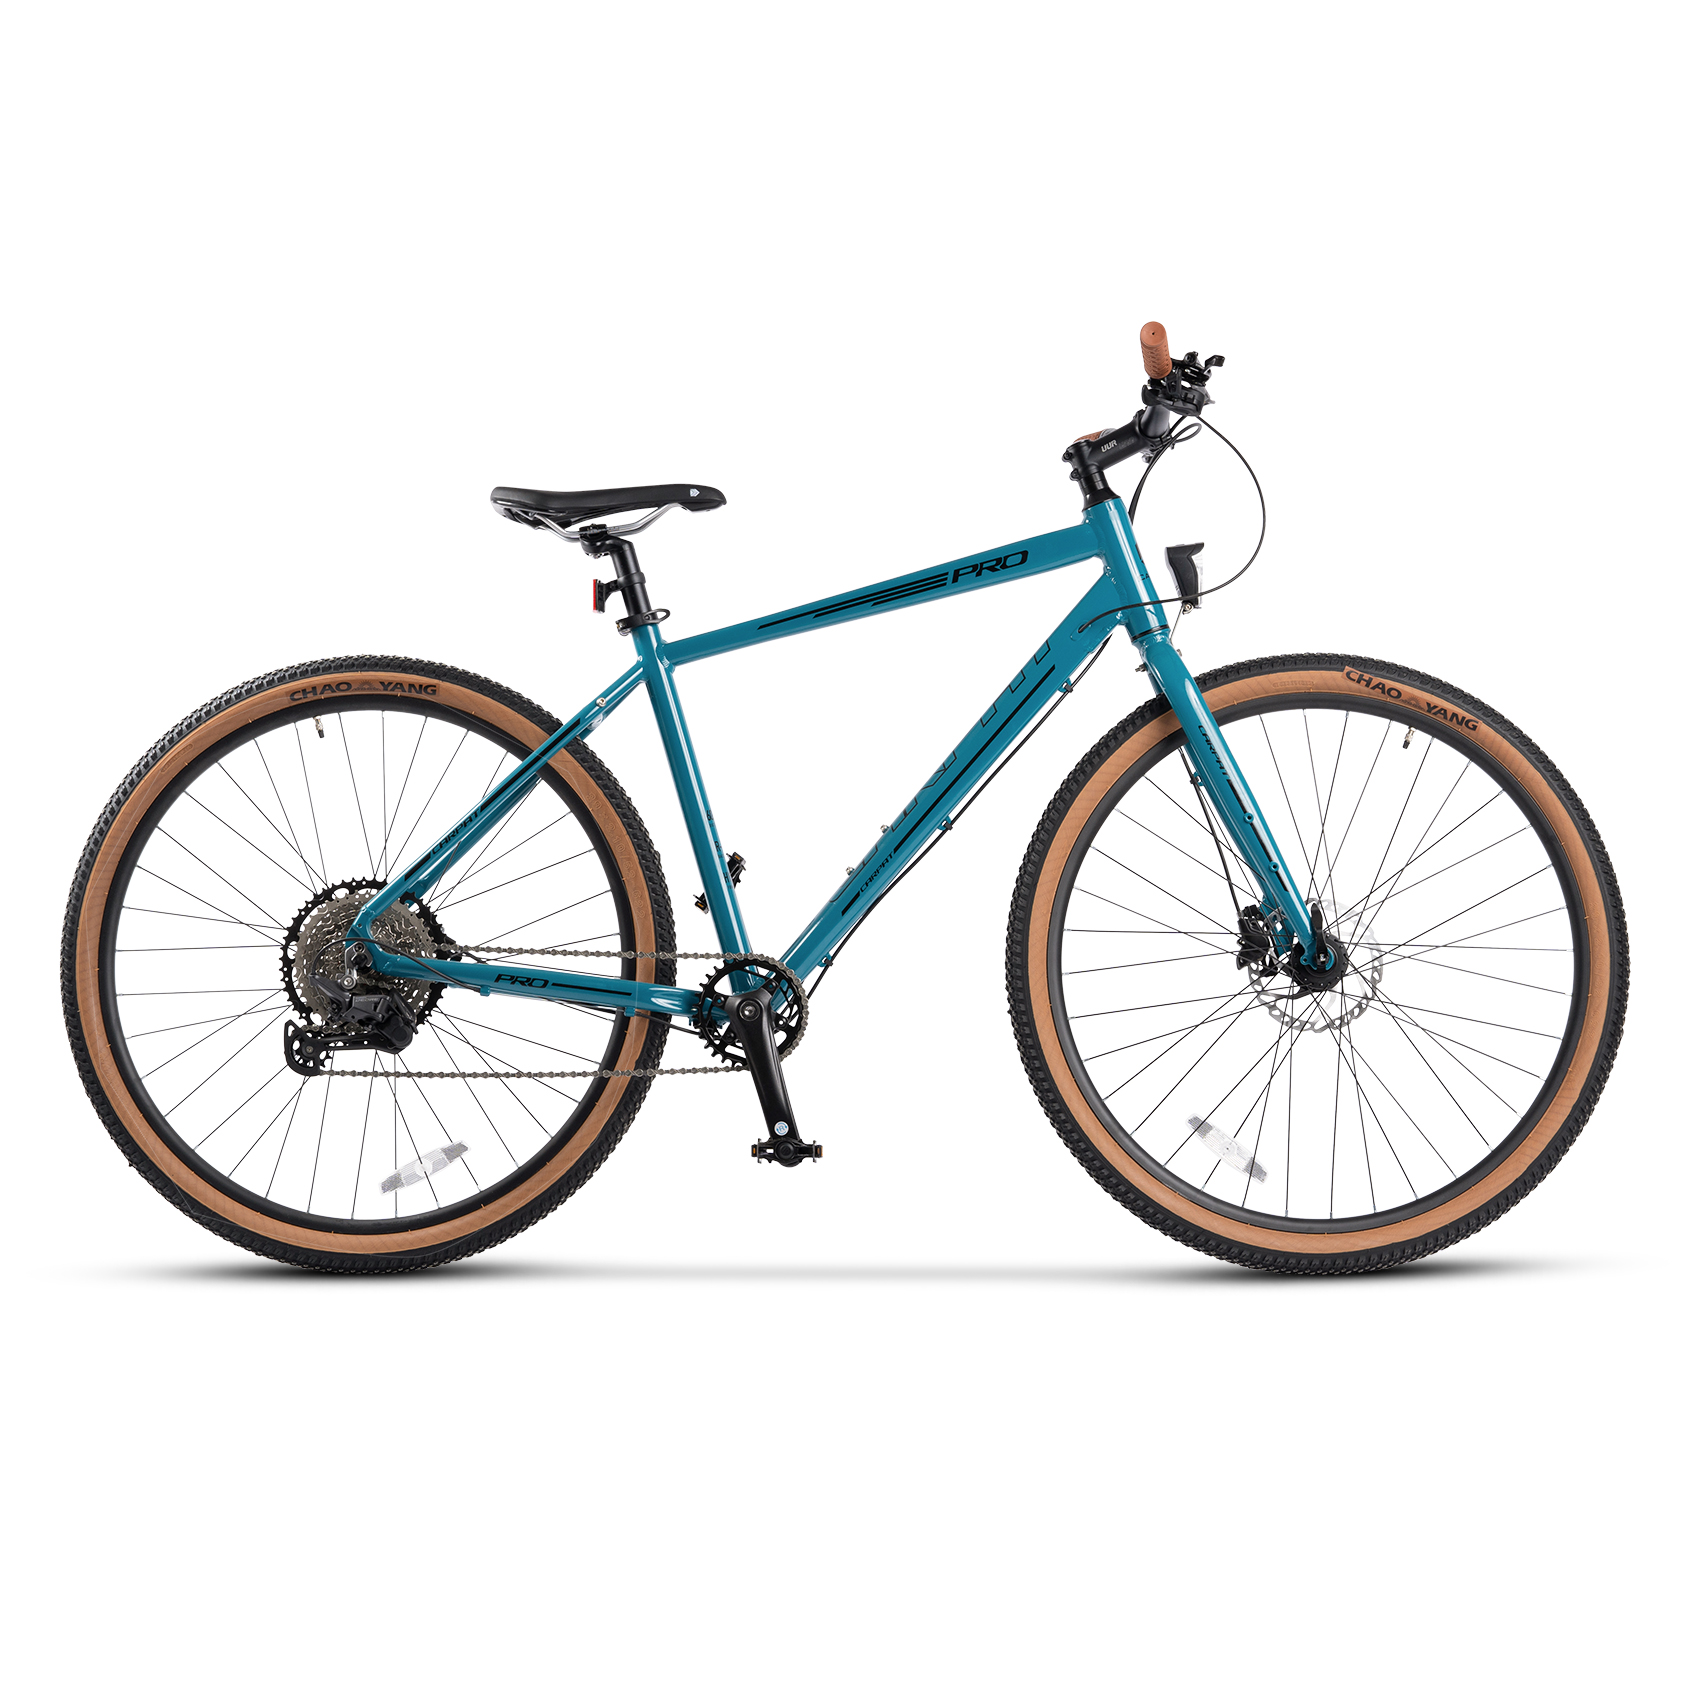 PROMO BICICLETE - Bicicleta Hidraulica Trekking Carpat PRO C29271H 29", Turcoaz/Negru, https:carpatsport.ro